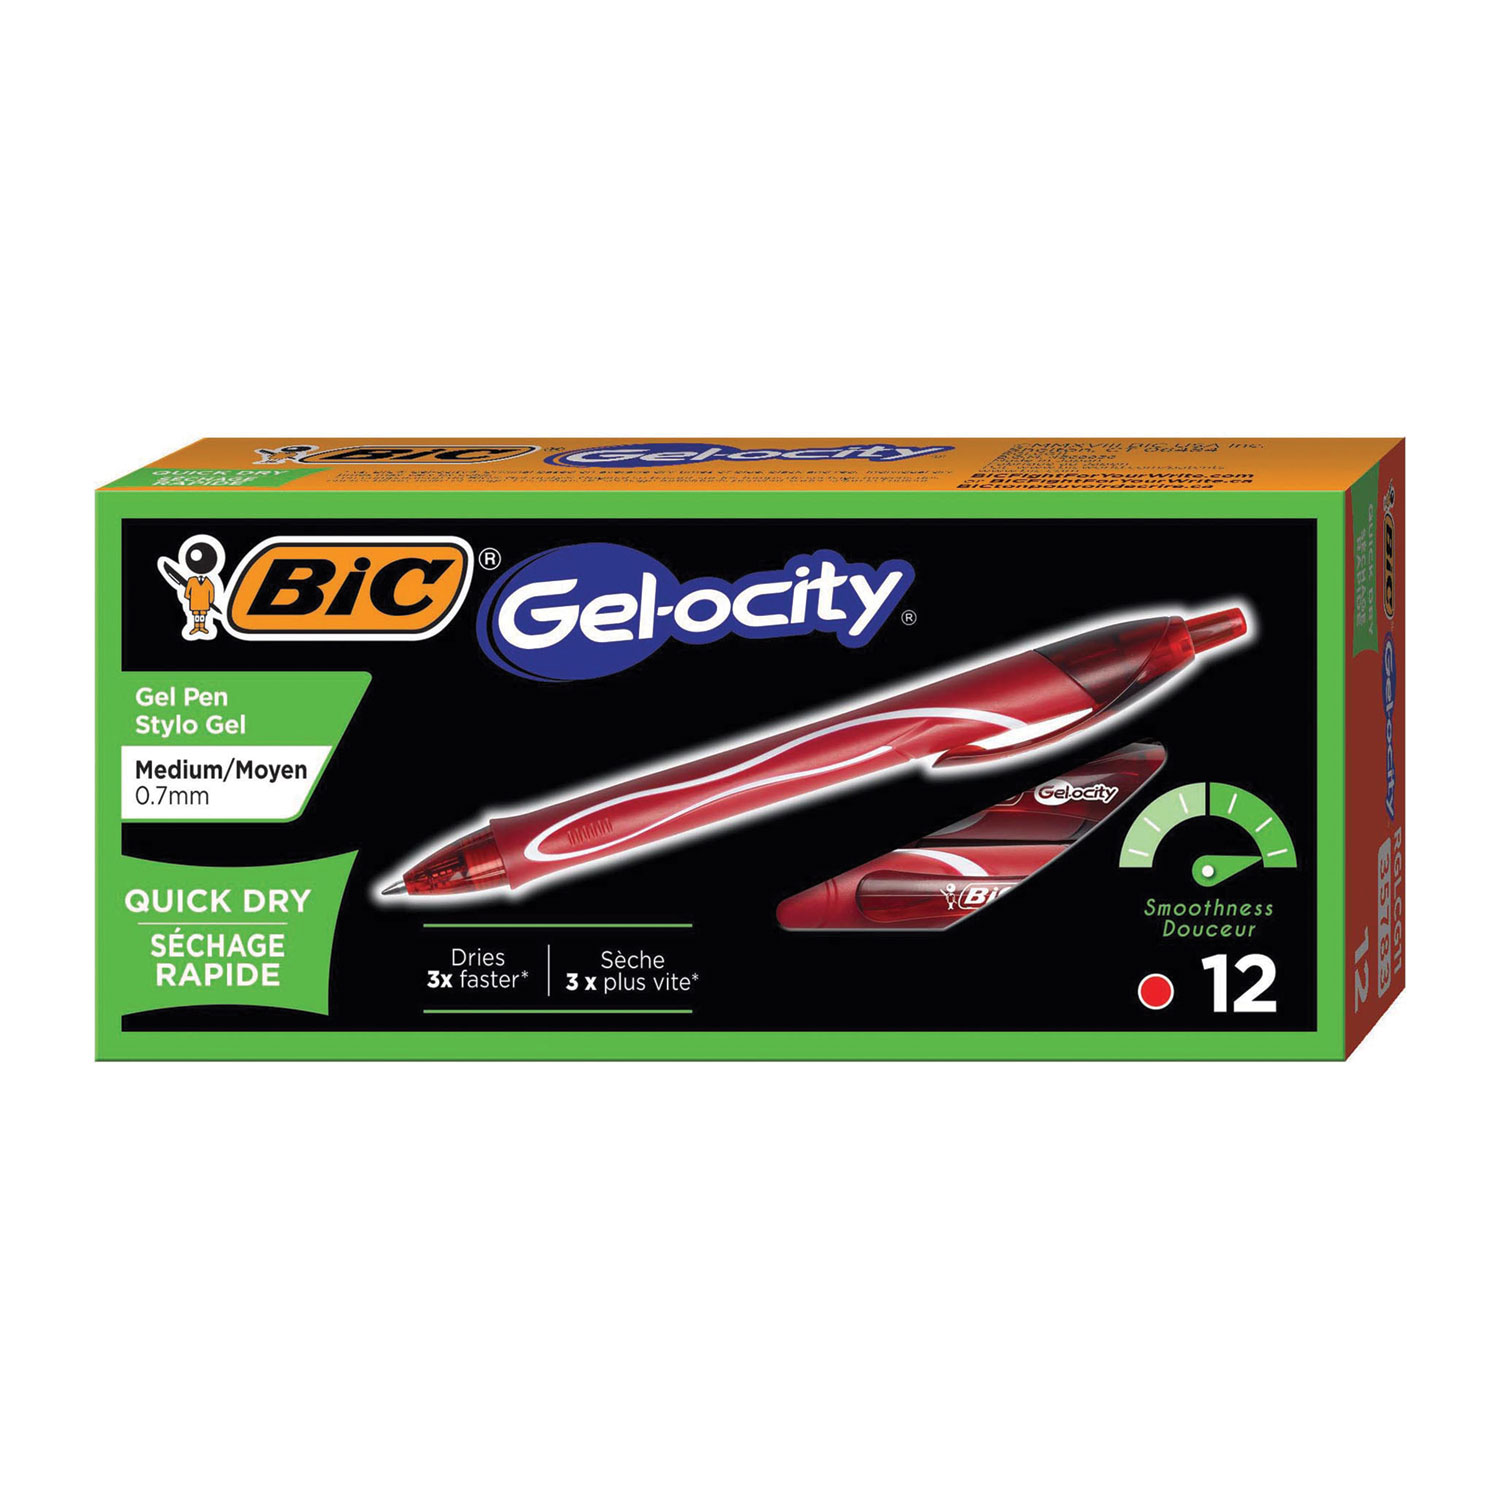  BIC RGLCG11-RD Gel-ocity Quick Dry Retractable Gel Pen, Fine 0.7mm, Red Ink/Barrel, Dozen (BICRGLCG11RD) 